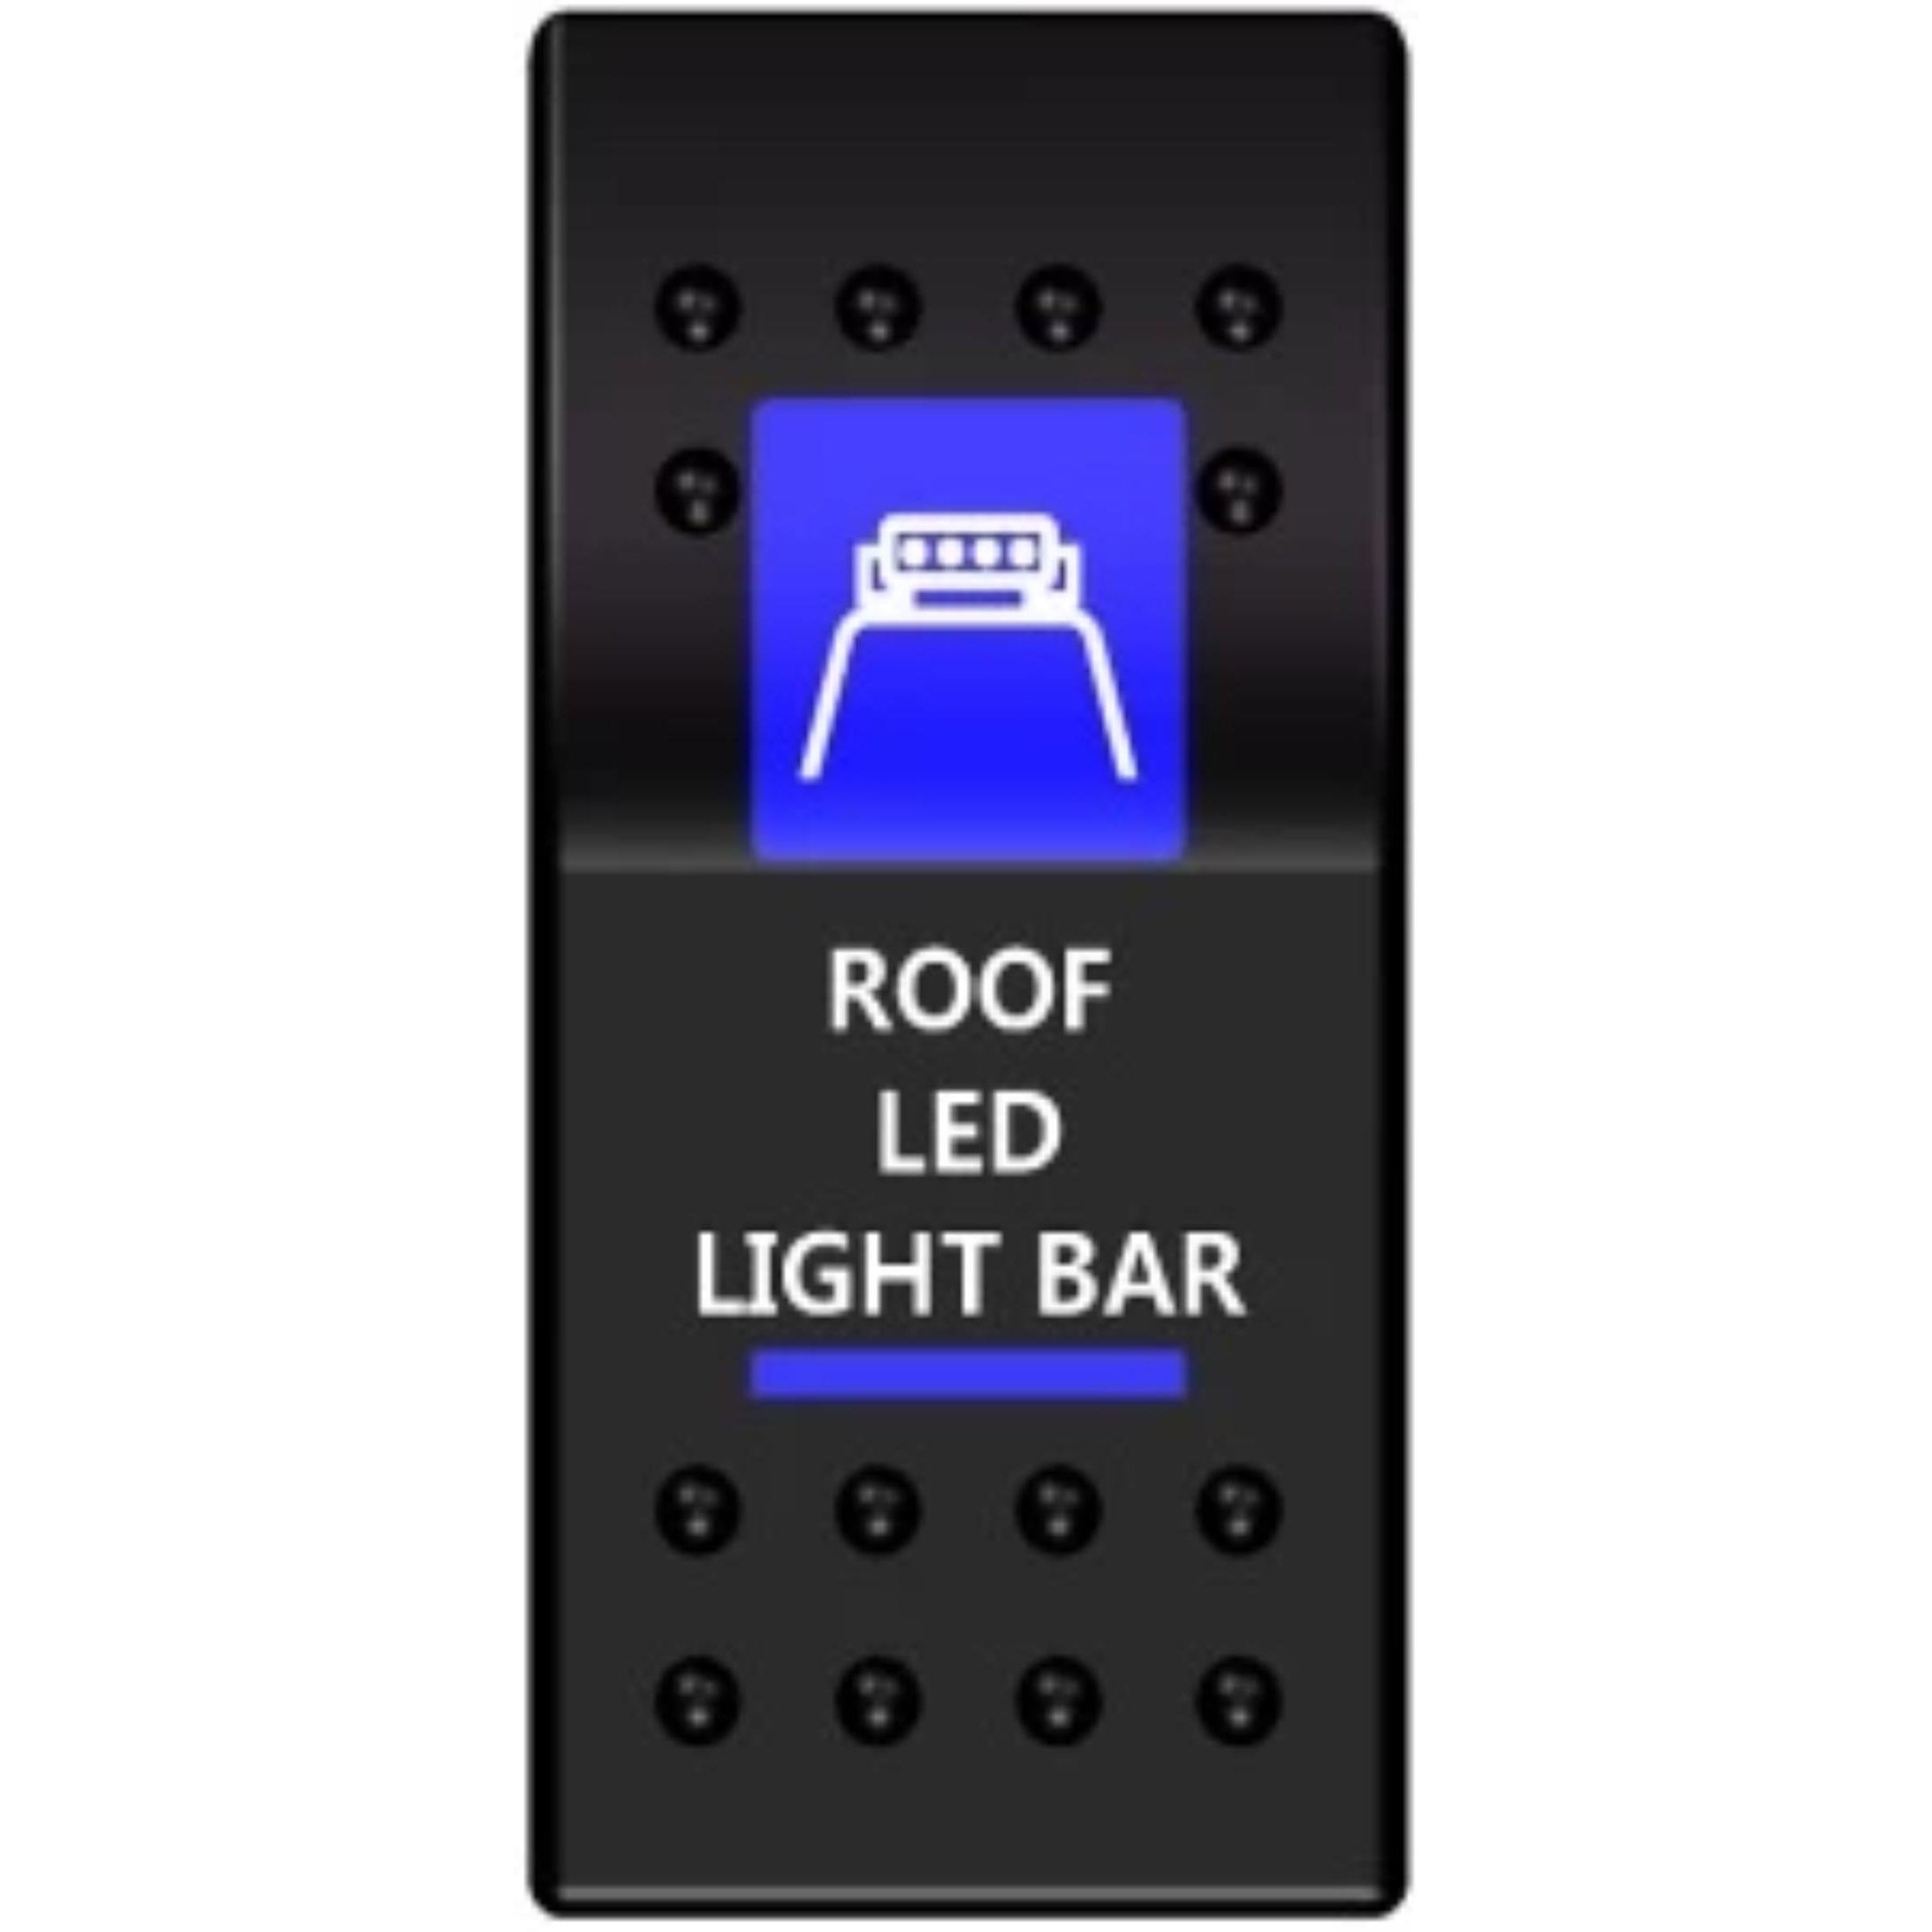 Roof LED Light Bar - Rocker Switch